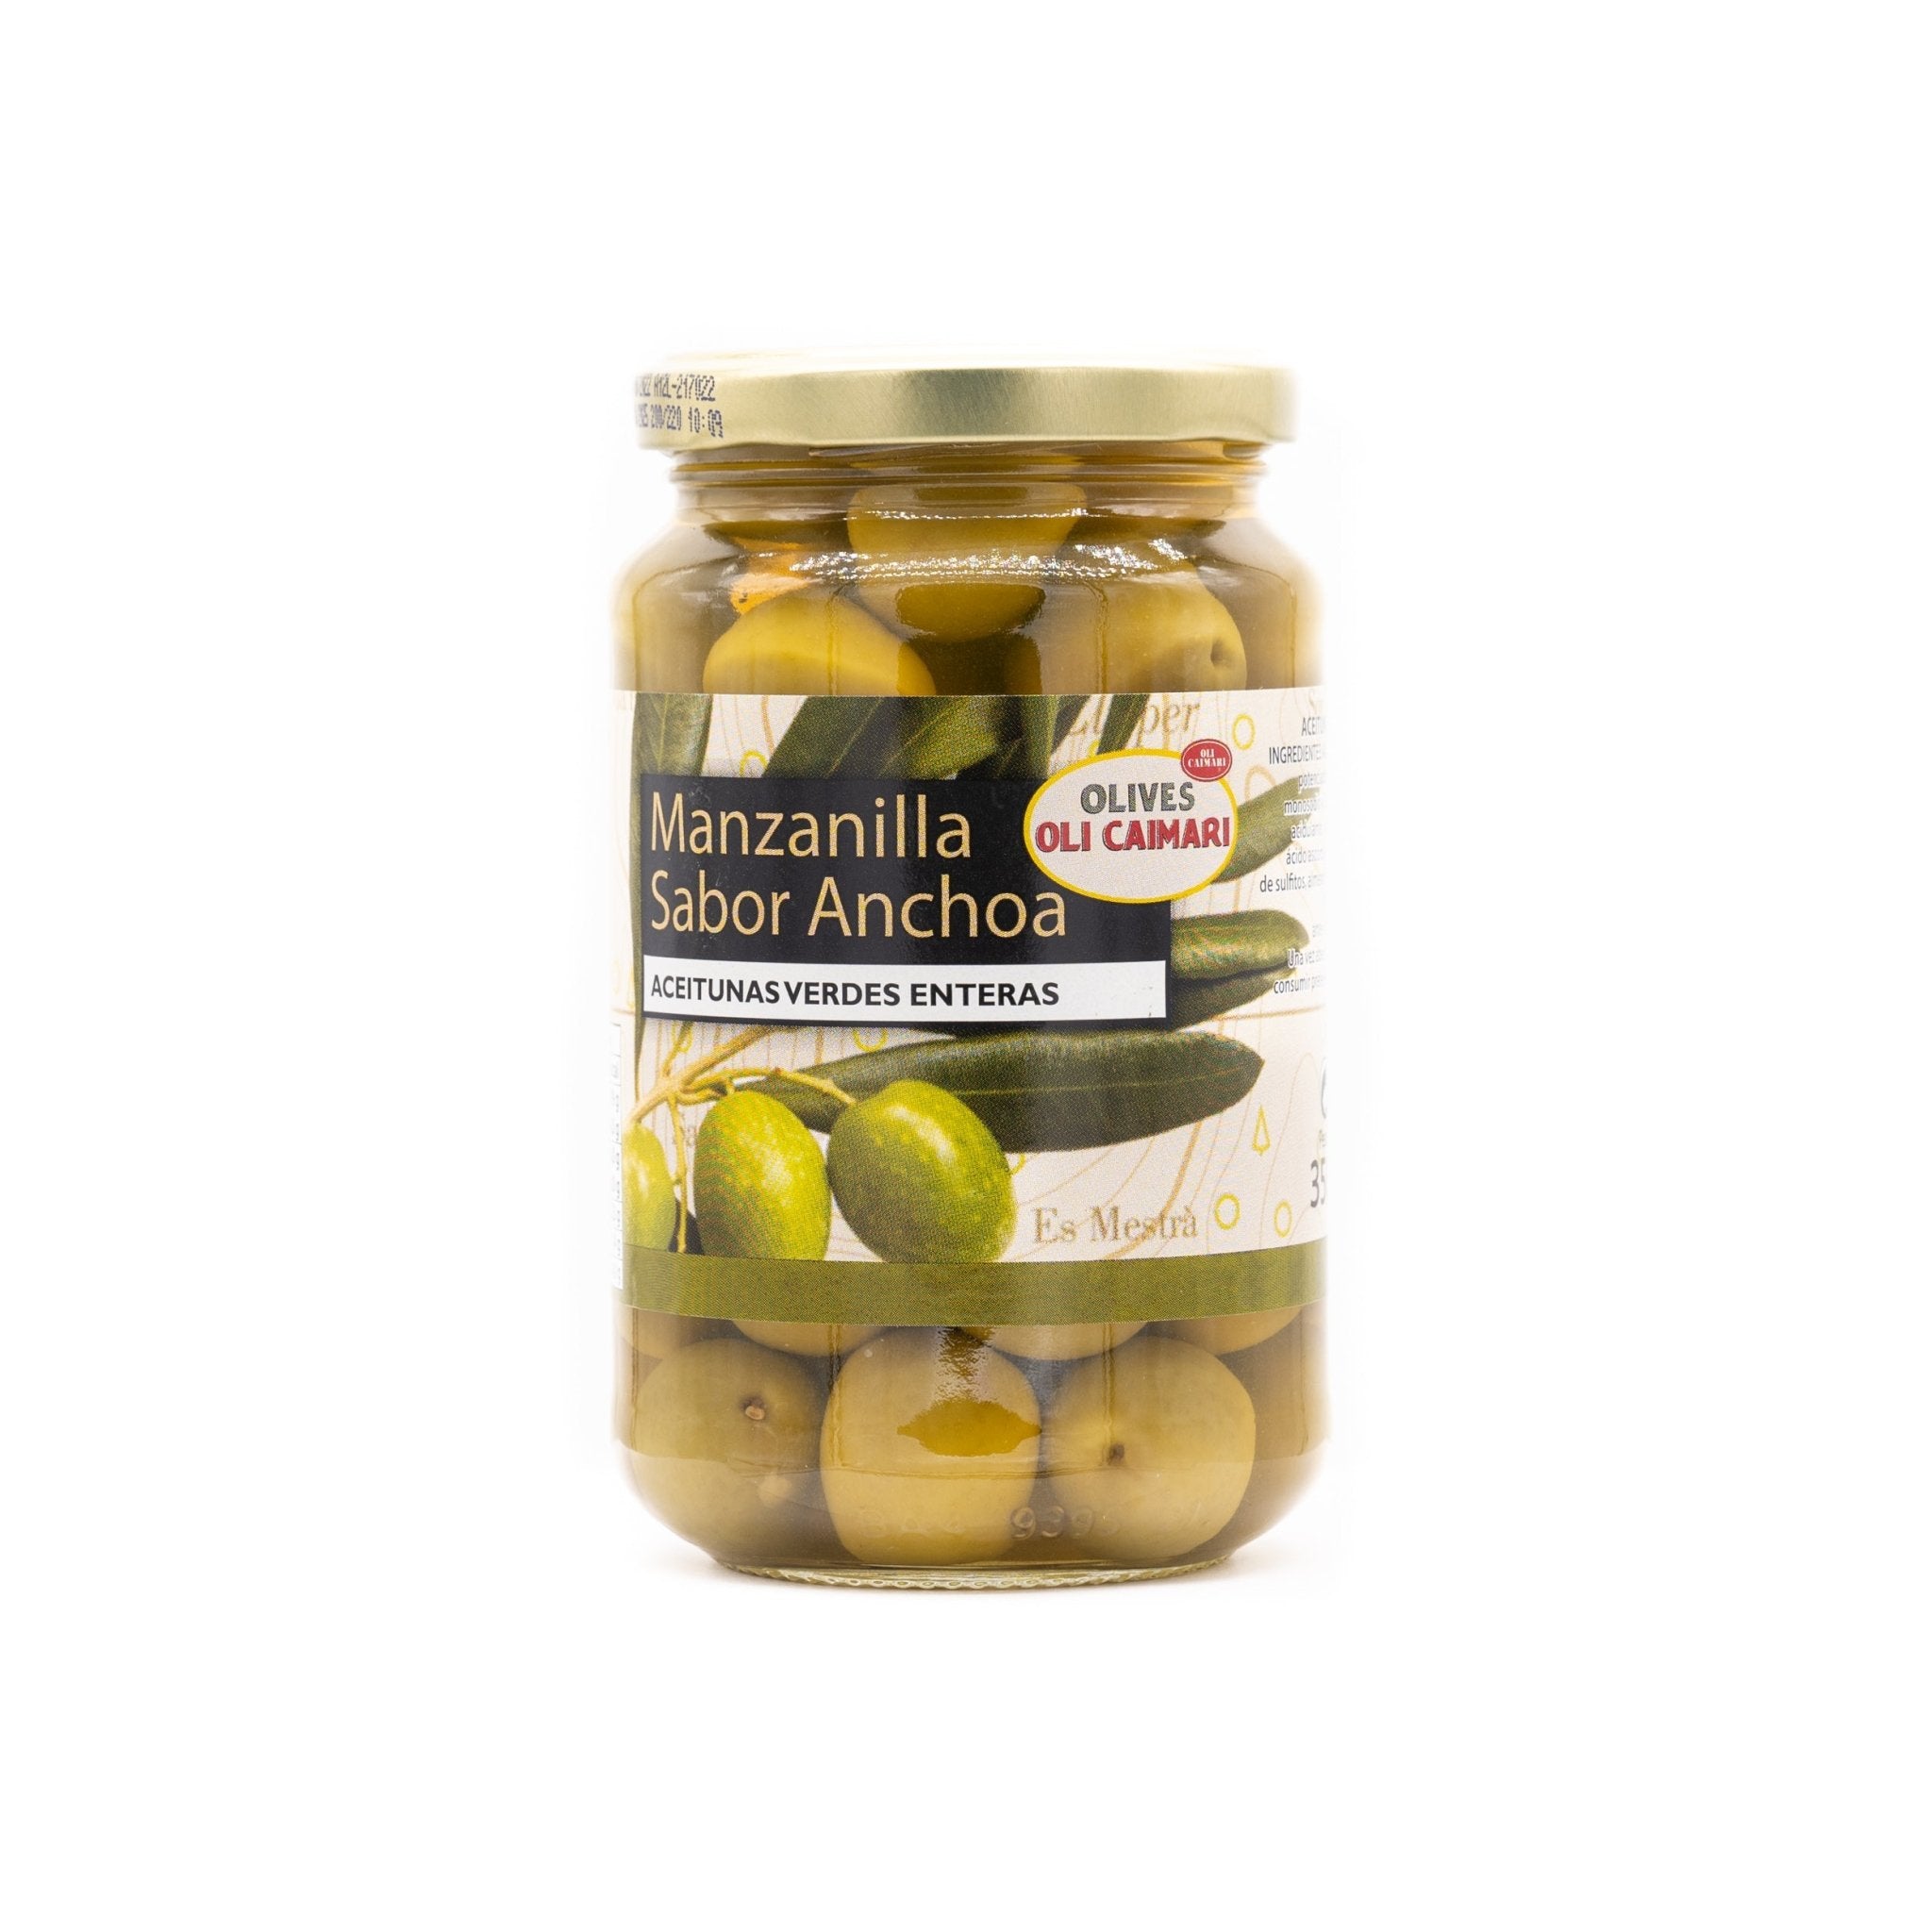 Grüne Oliven mit Anchovis Geschmack (190g) - Gourmet Markt - Olives Oli Caimari